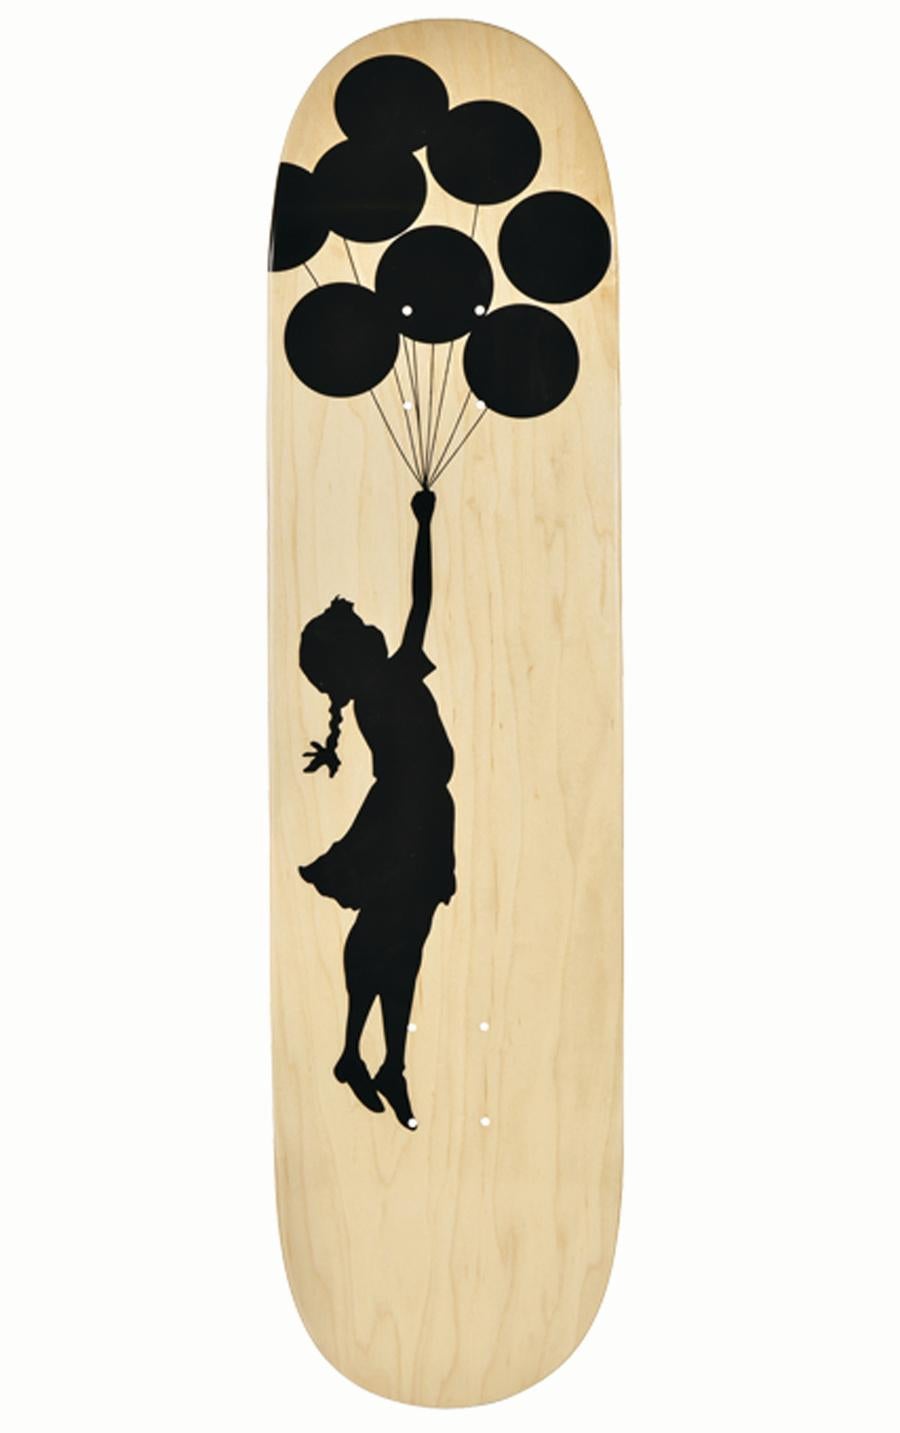 Balloon Girl skateboard deck - Print by Banksy